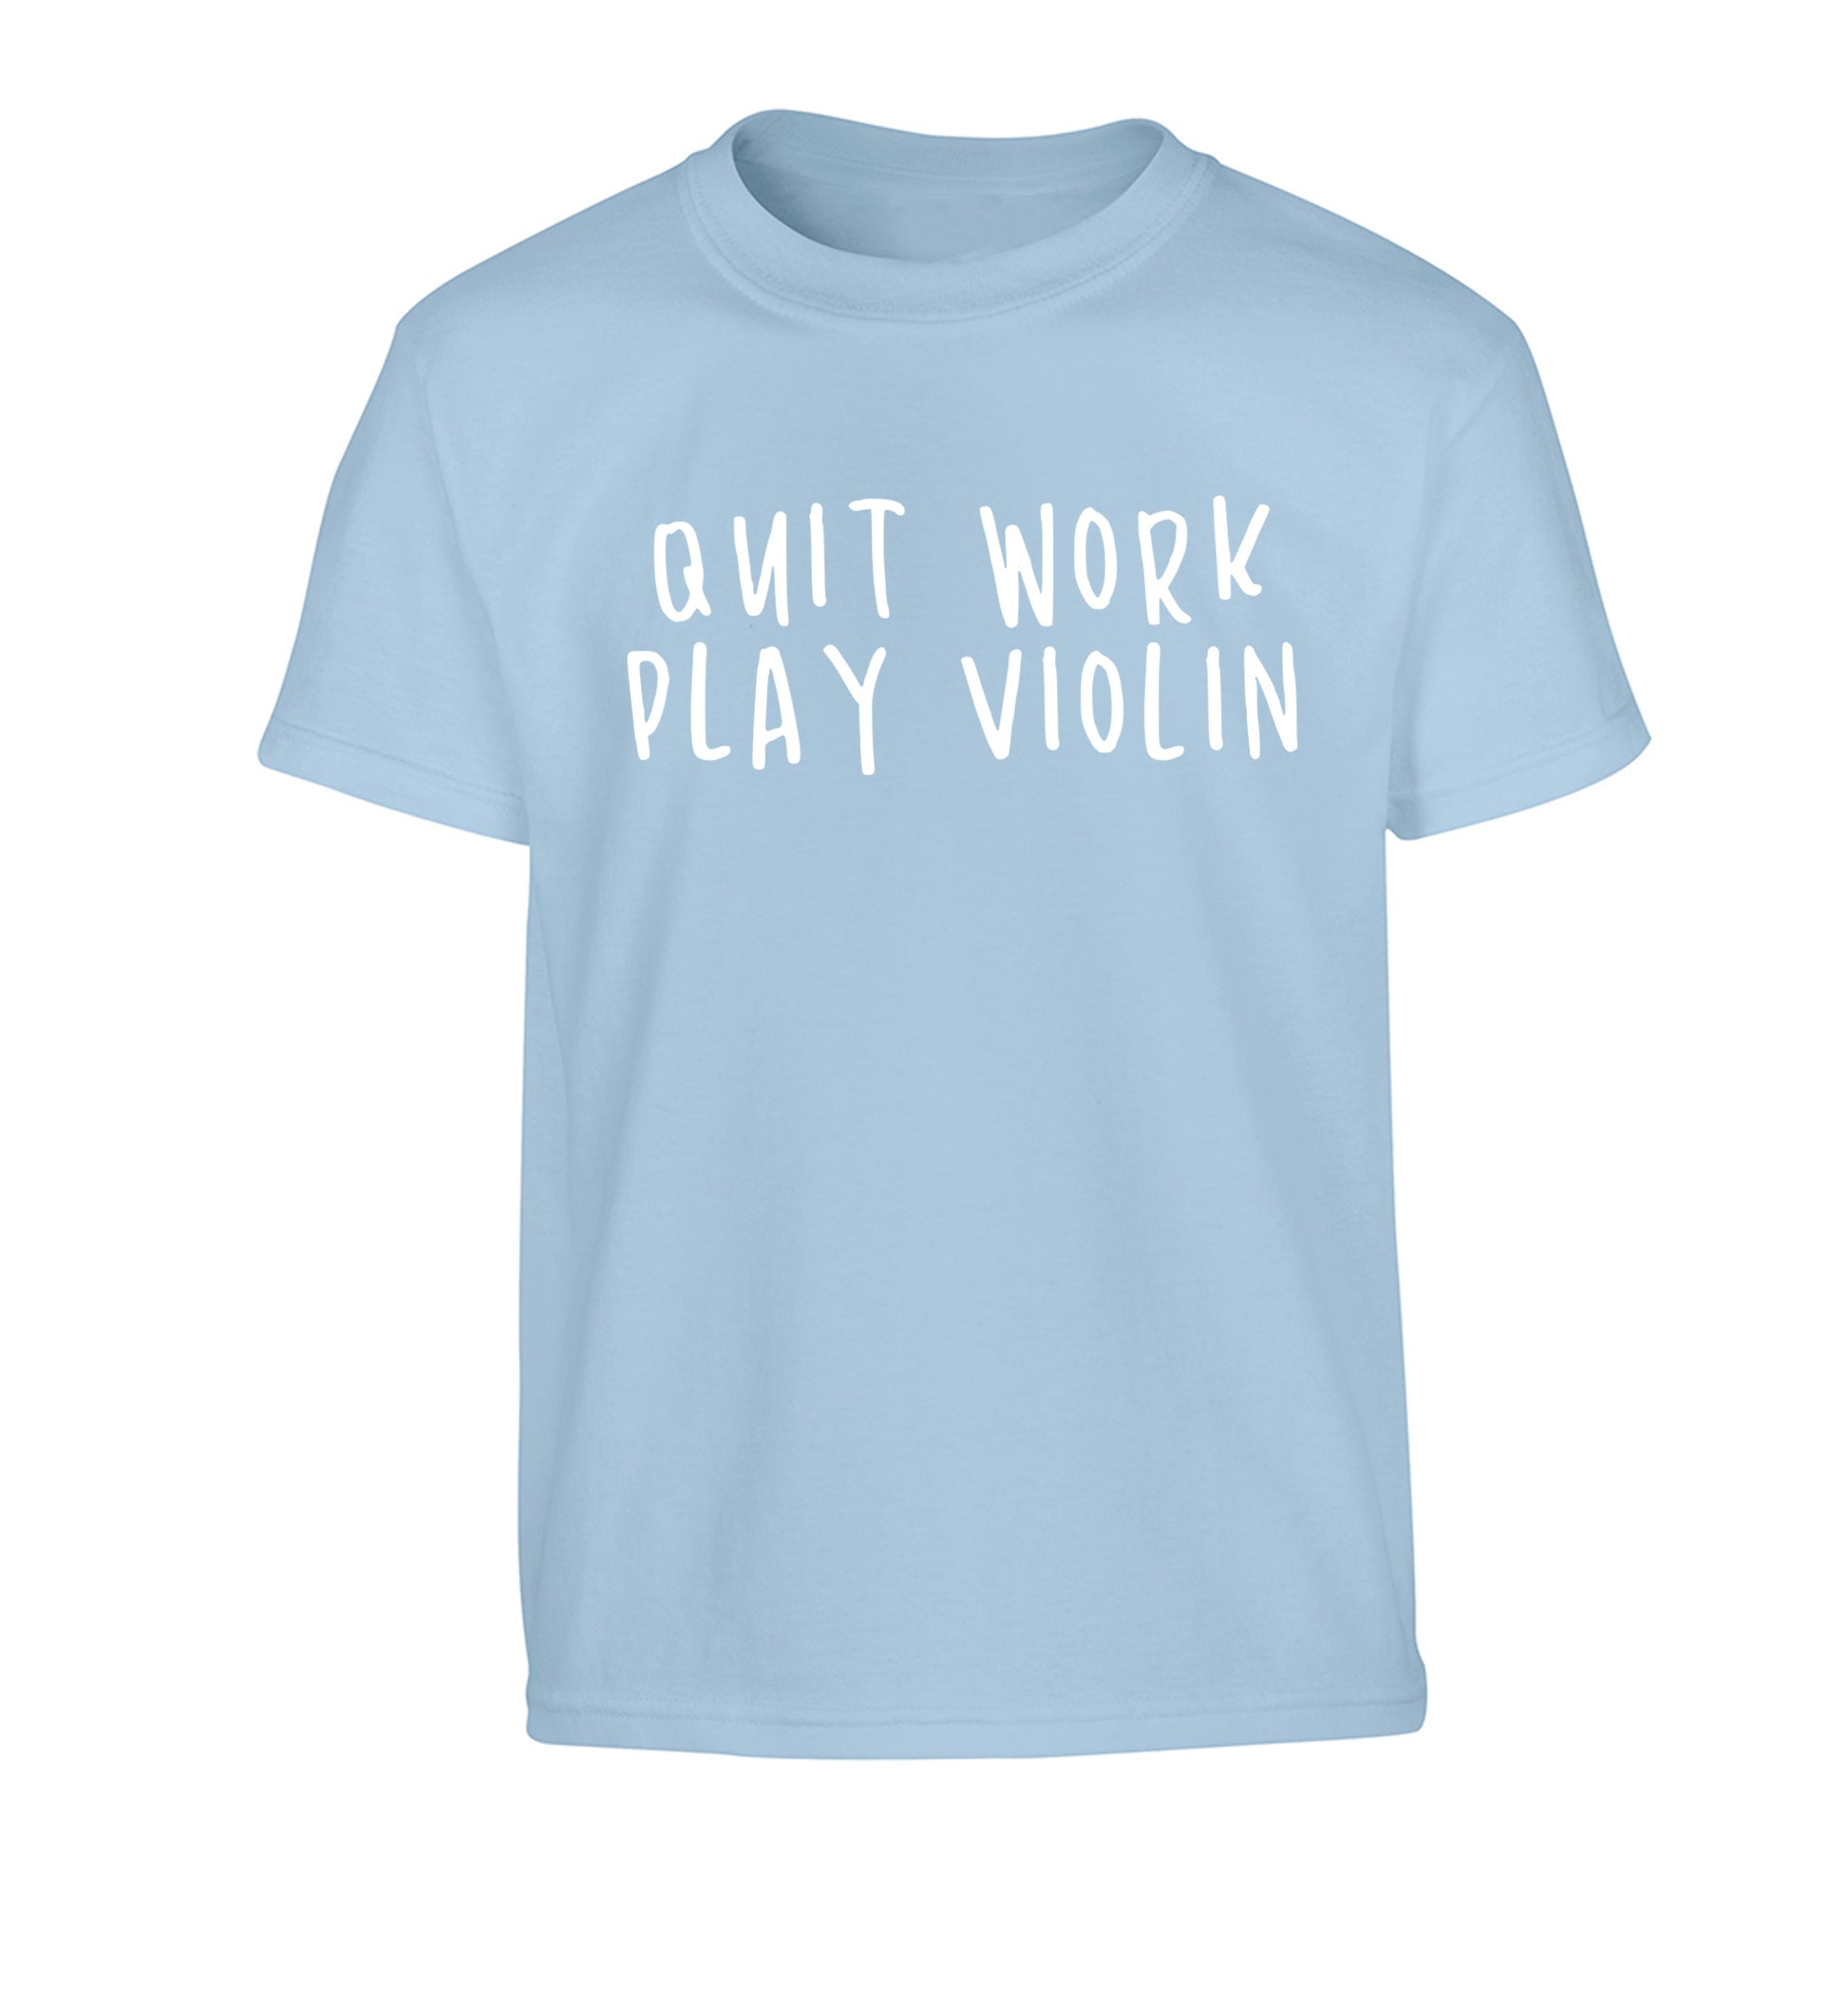 Quit work play violin Children's light blue Tshirt 12-13 Years